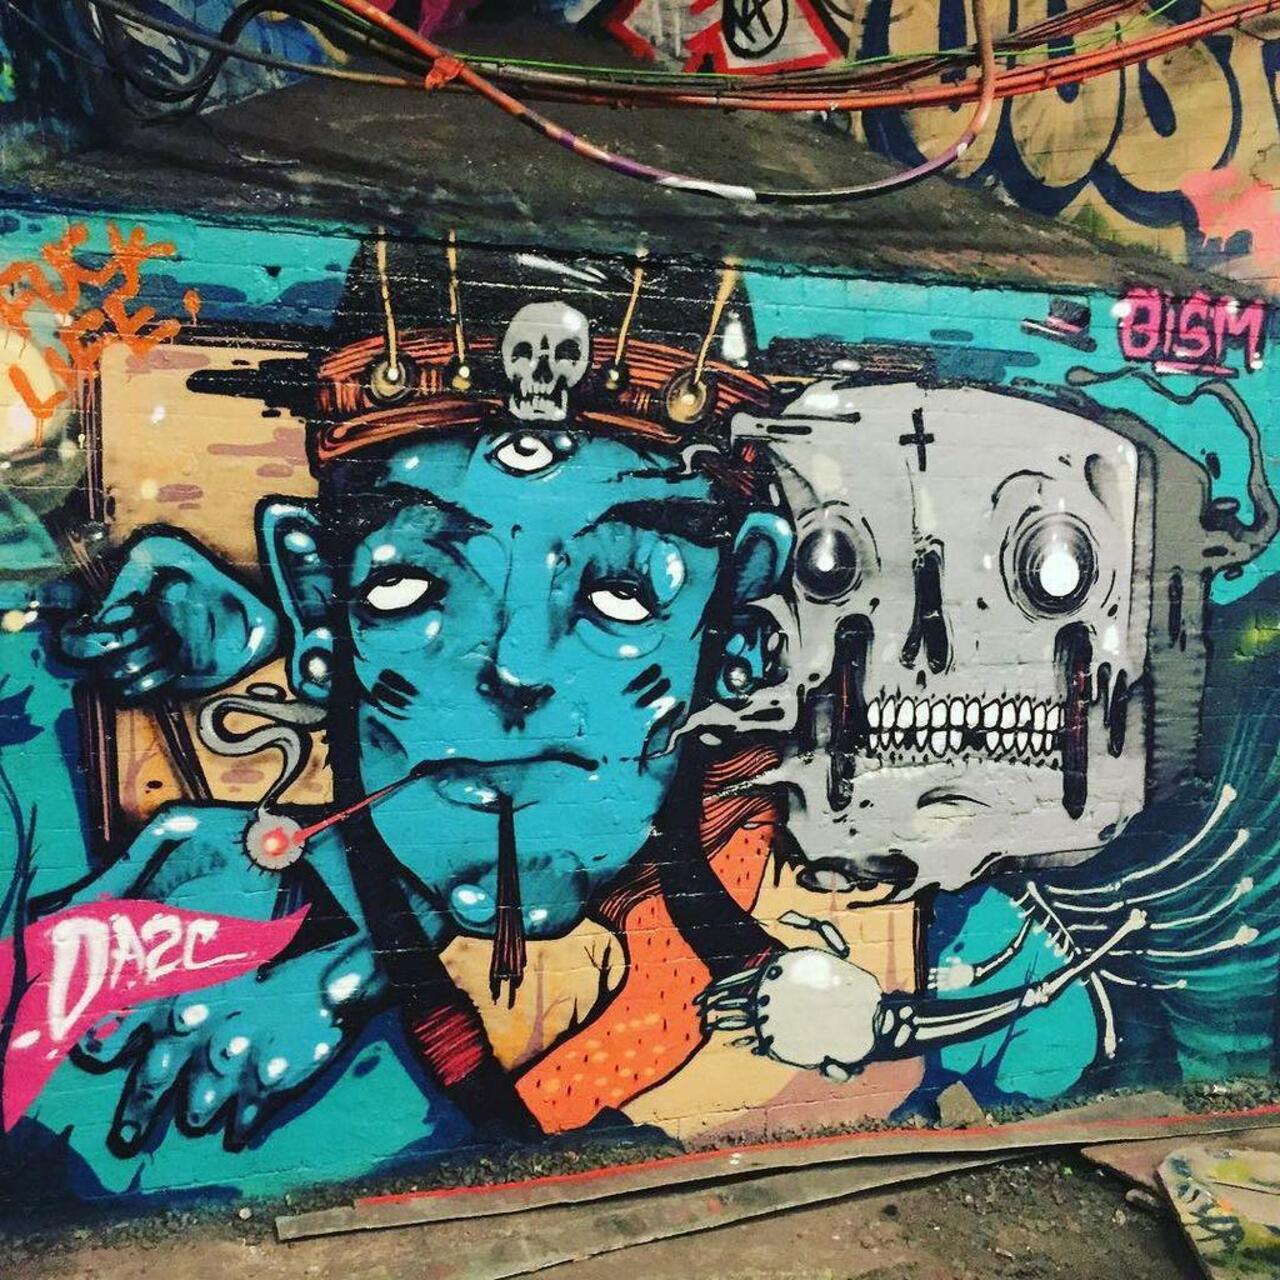 #arturbain #graffiti #graphicart #contemporaryart #instagraffiti #mural #murales #graffito #graffitiwall #Streetart… http://t.co/OPeD0apx8S